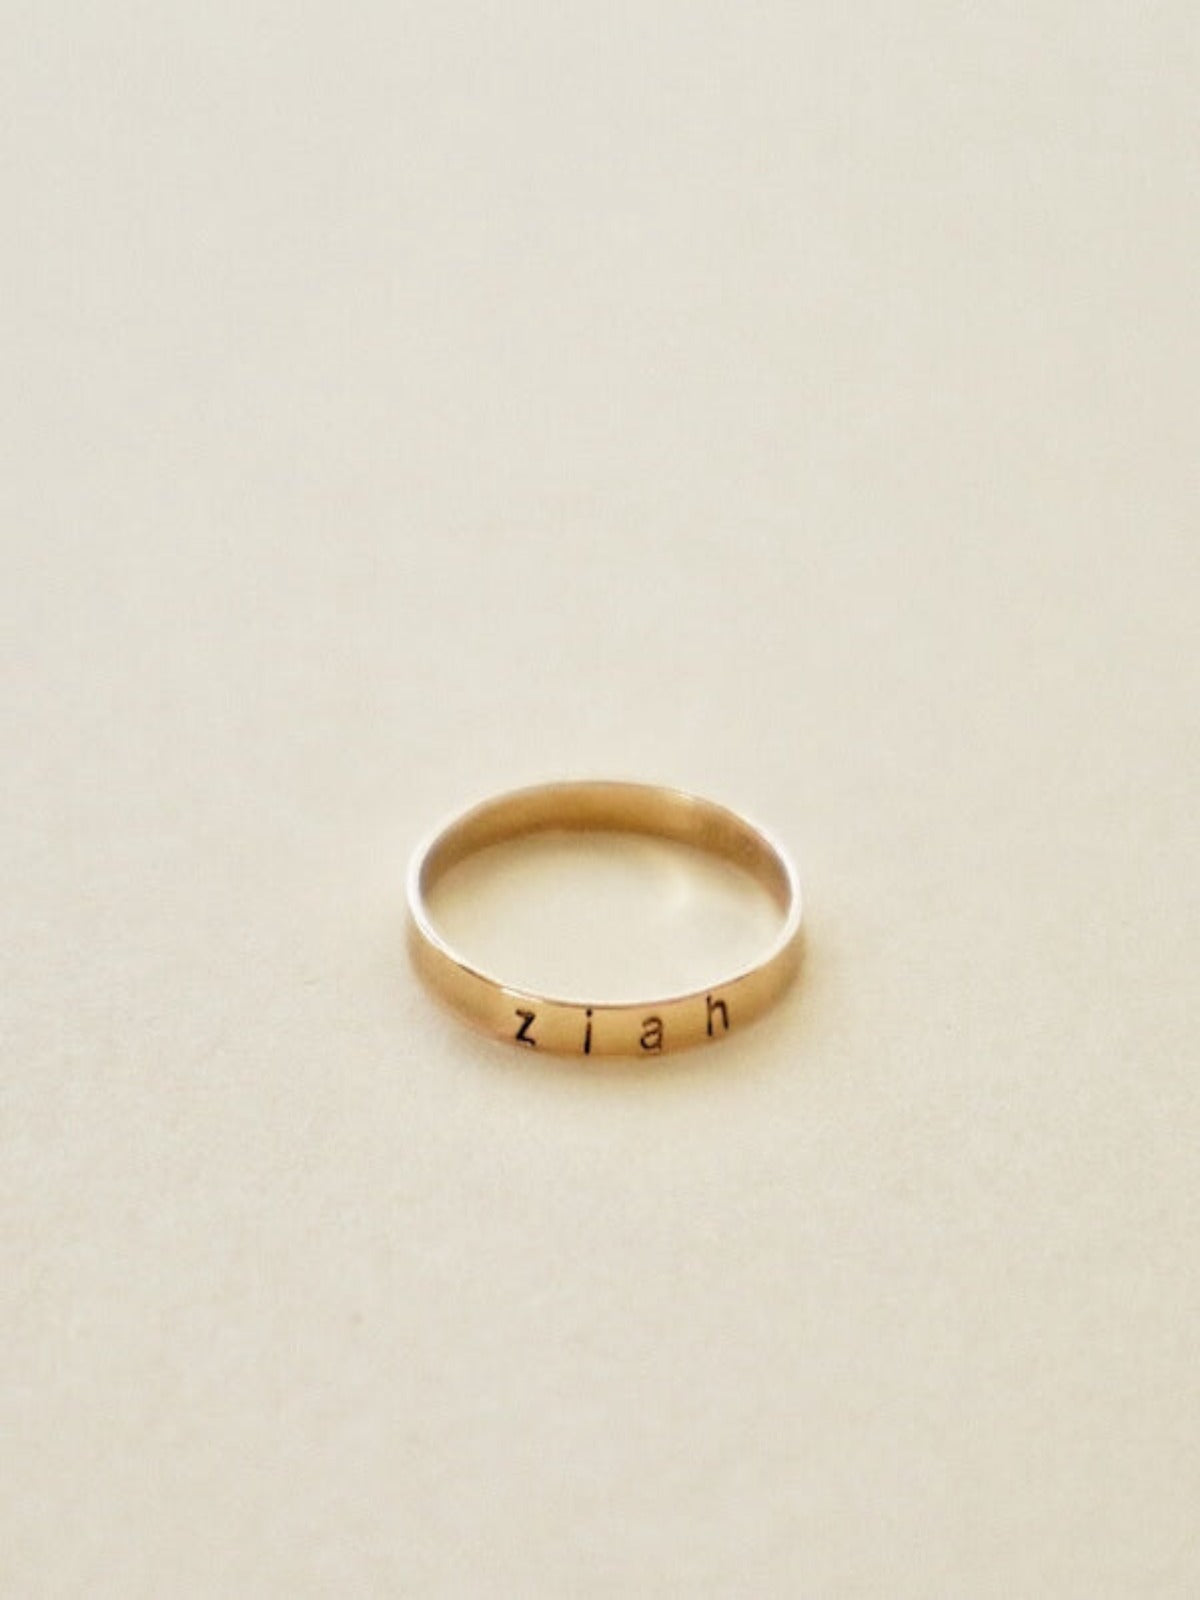 Yarra - Personalised Band Ring